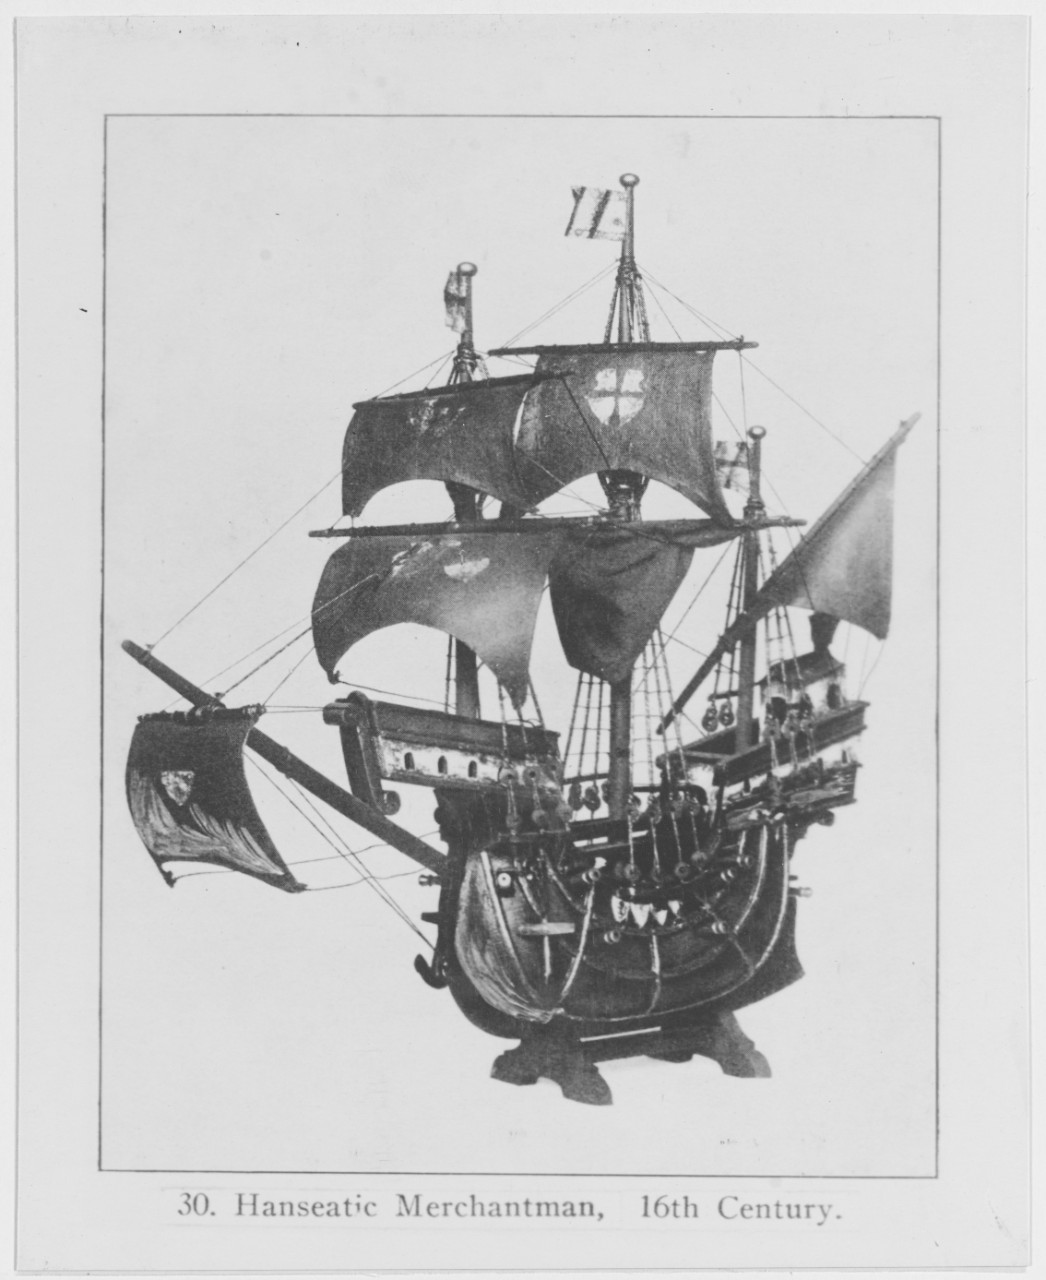 Model of Hanseatic Merchantman Ship, 16th Century